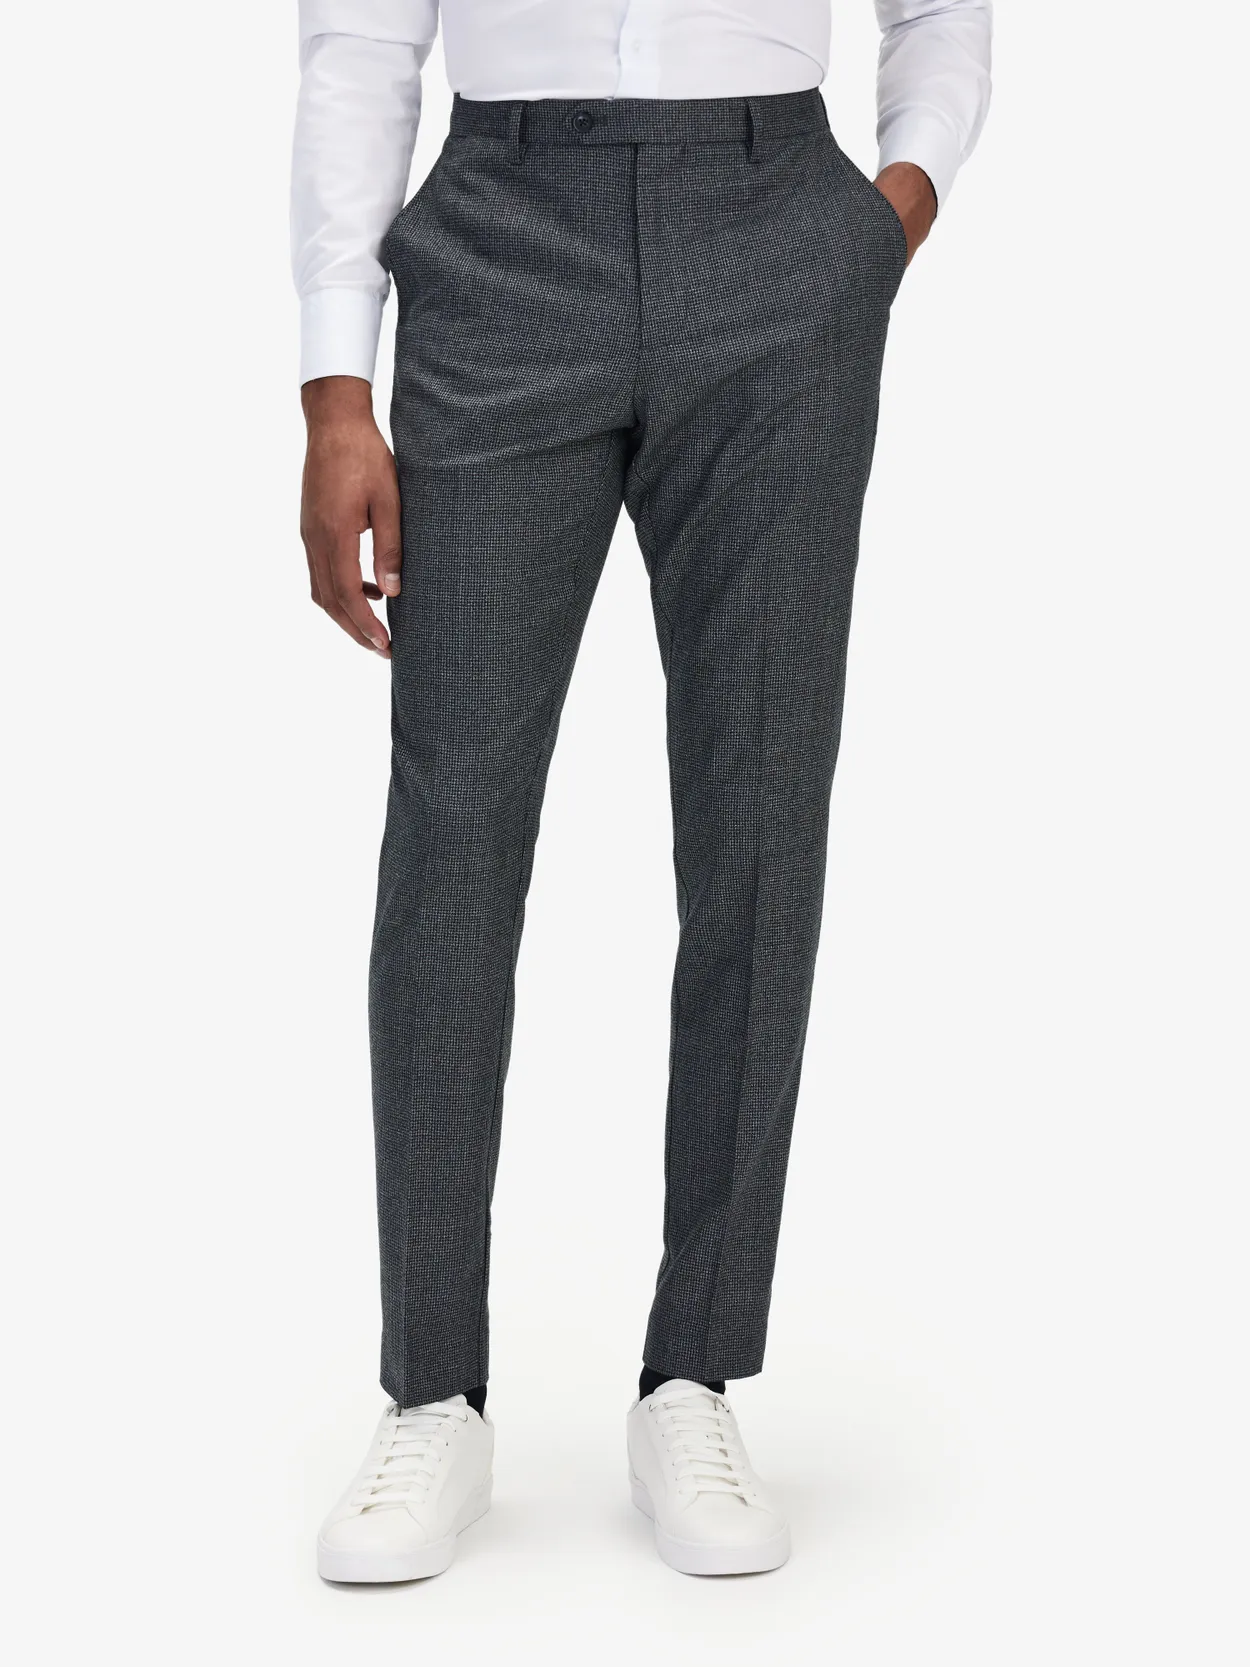 Grey & Black Wool Trousers